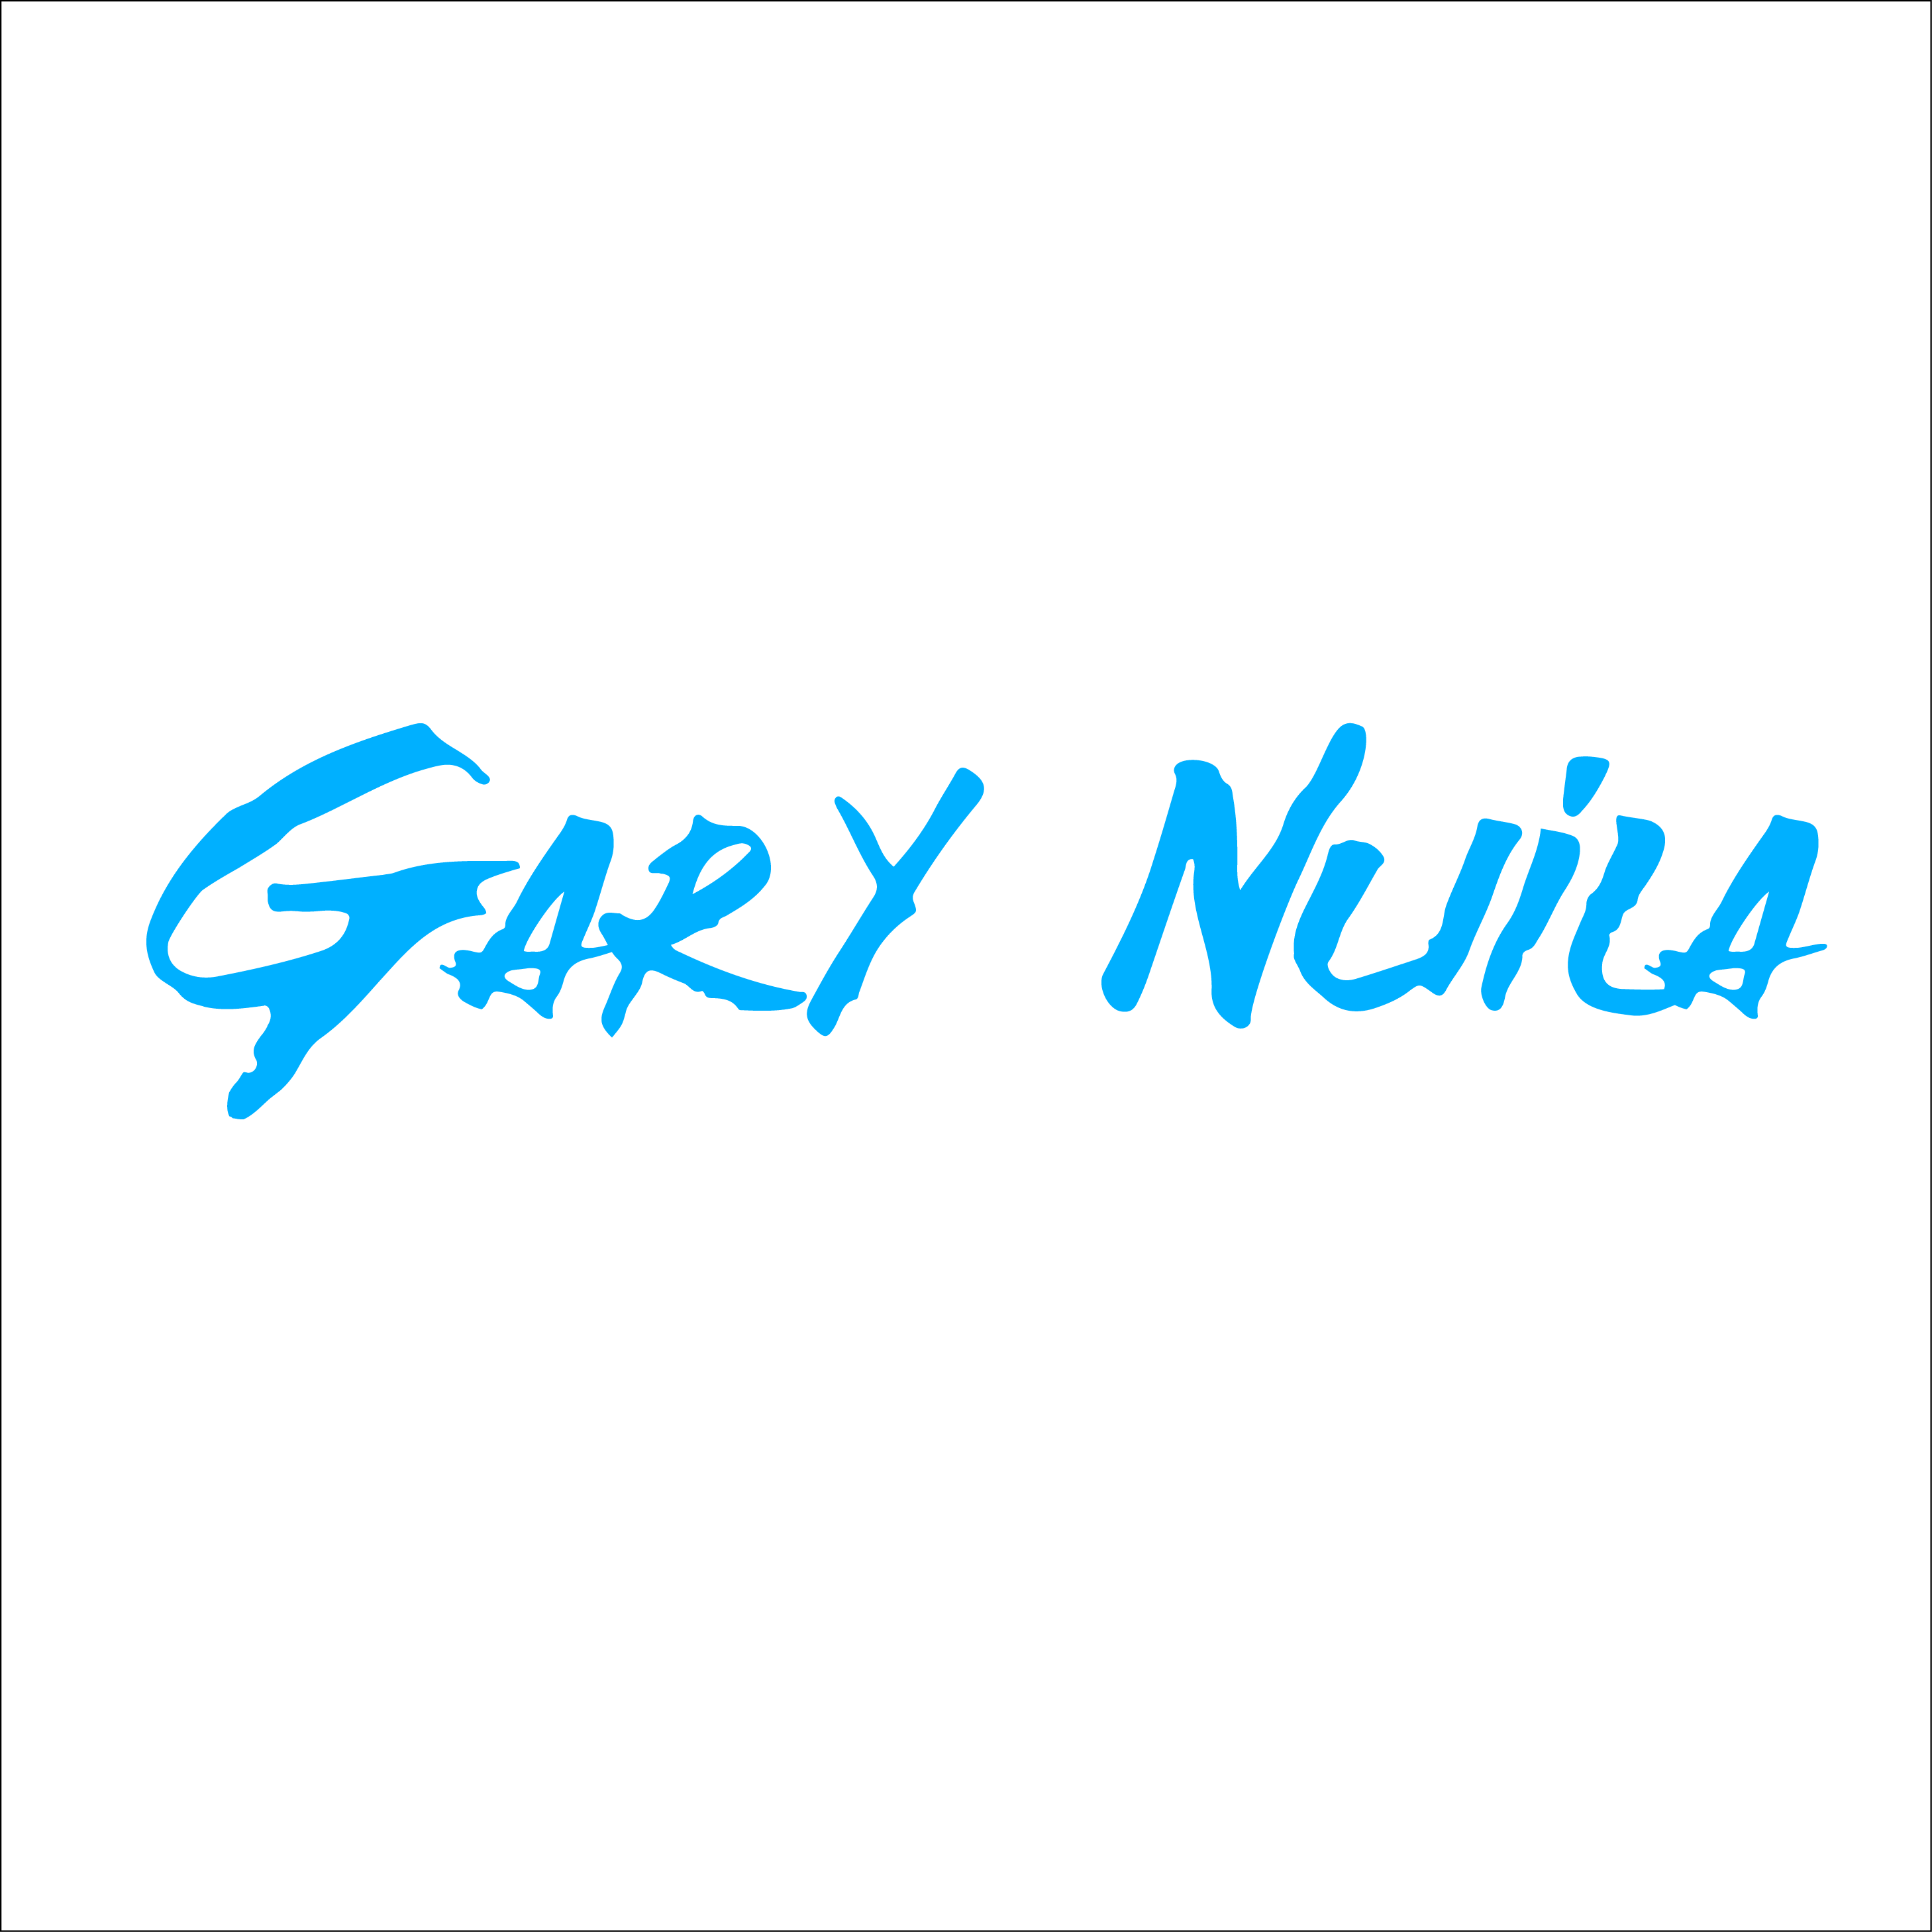 Gary Nuila